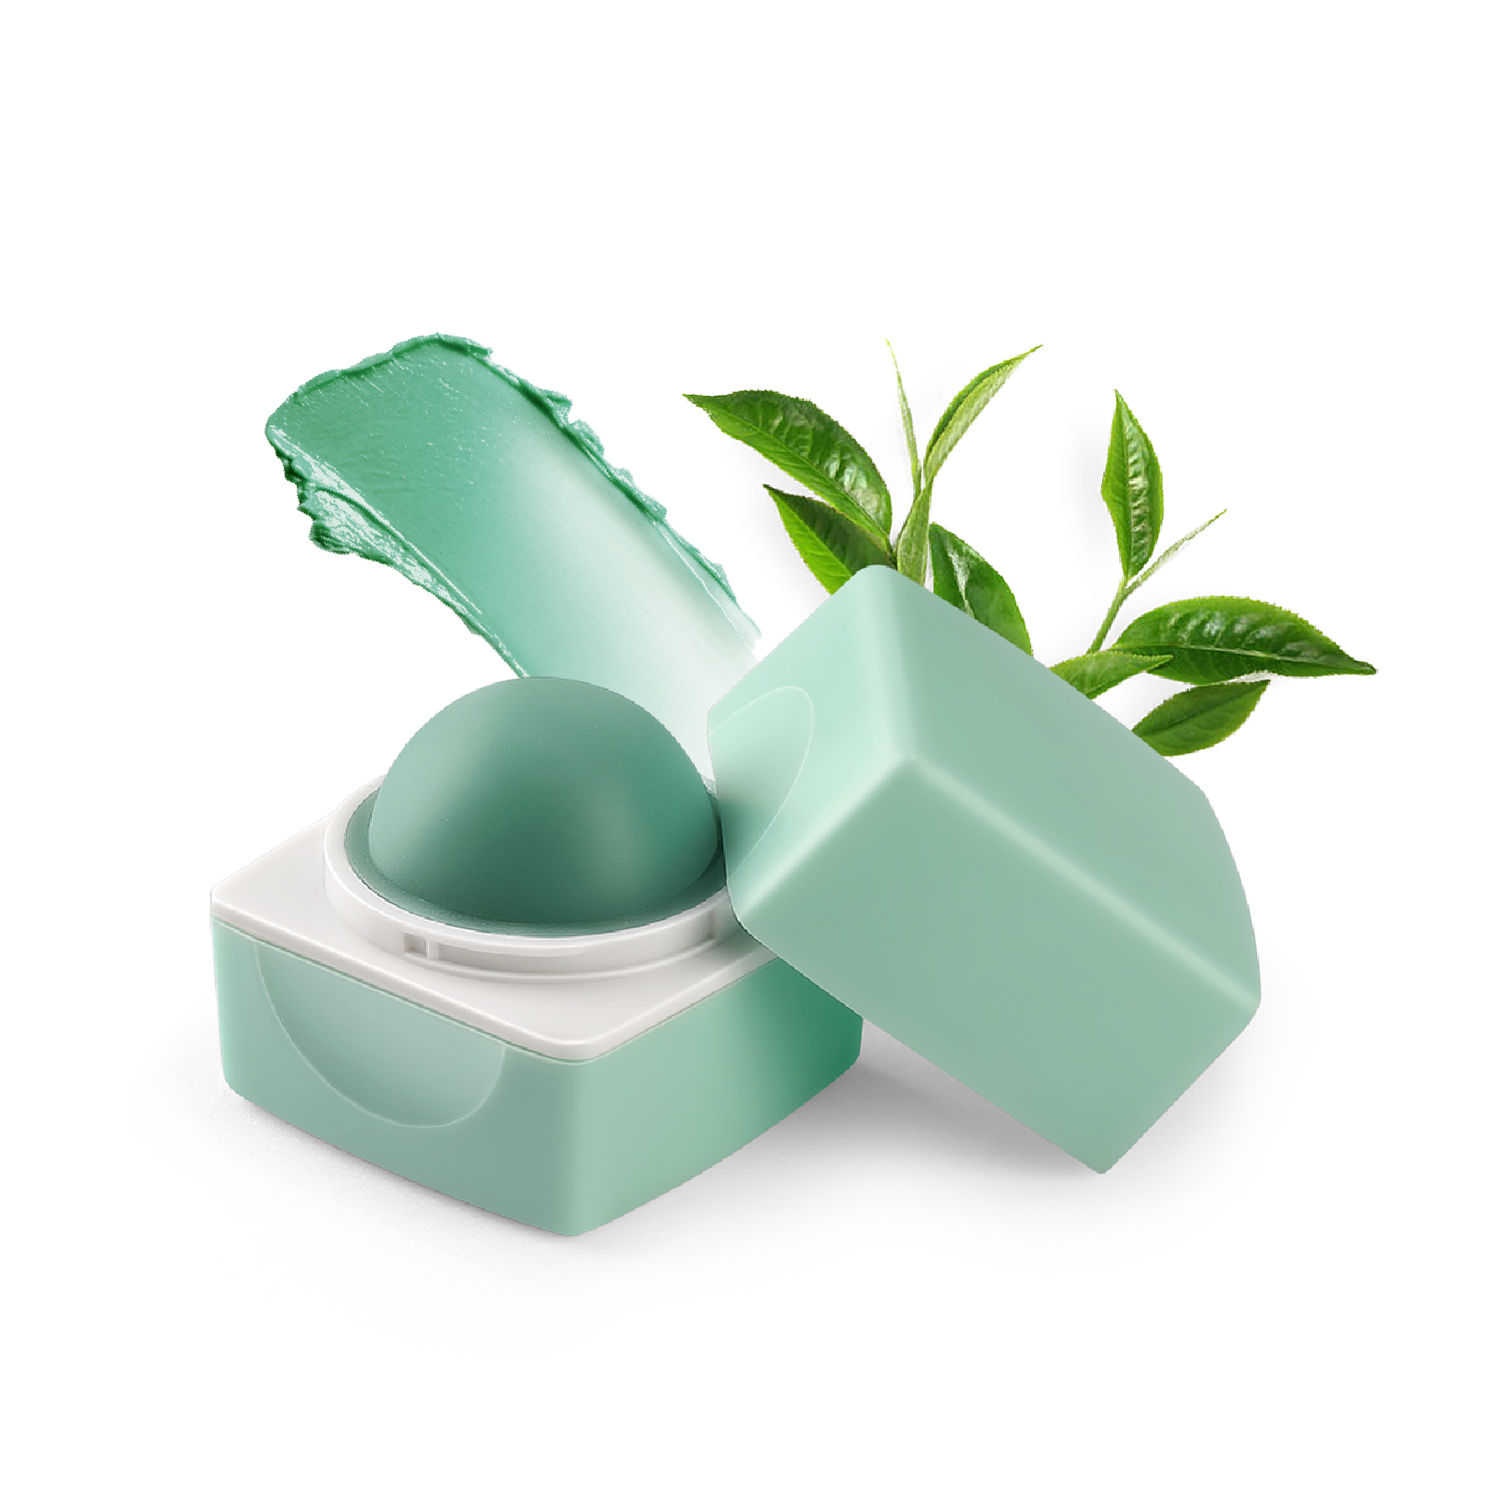 Buy Organic Harvest High Gloss Lip Balm: Green Tea | Lip Balm for Women & Men | Organic Lip Balm to Lighten Dark Lips | 100% American certified organic | Sulphate & Paraben-free | 10gm - Purplle